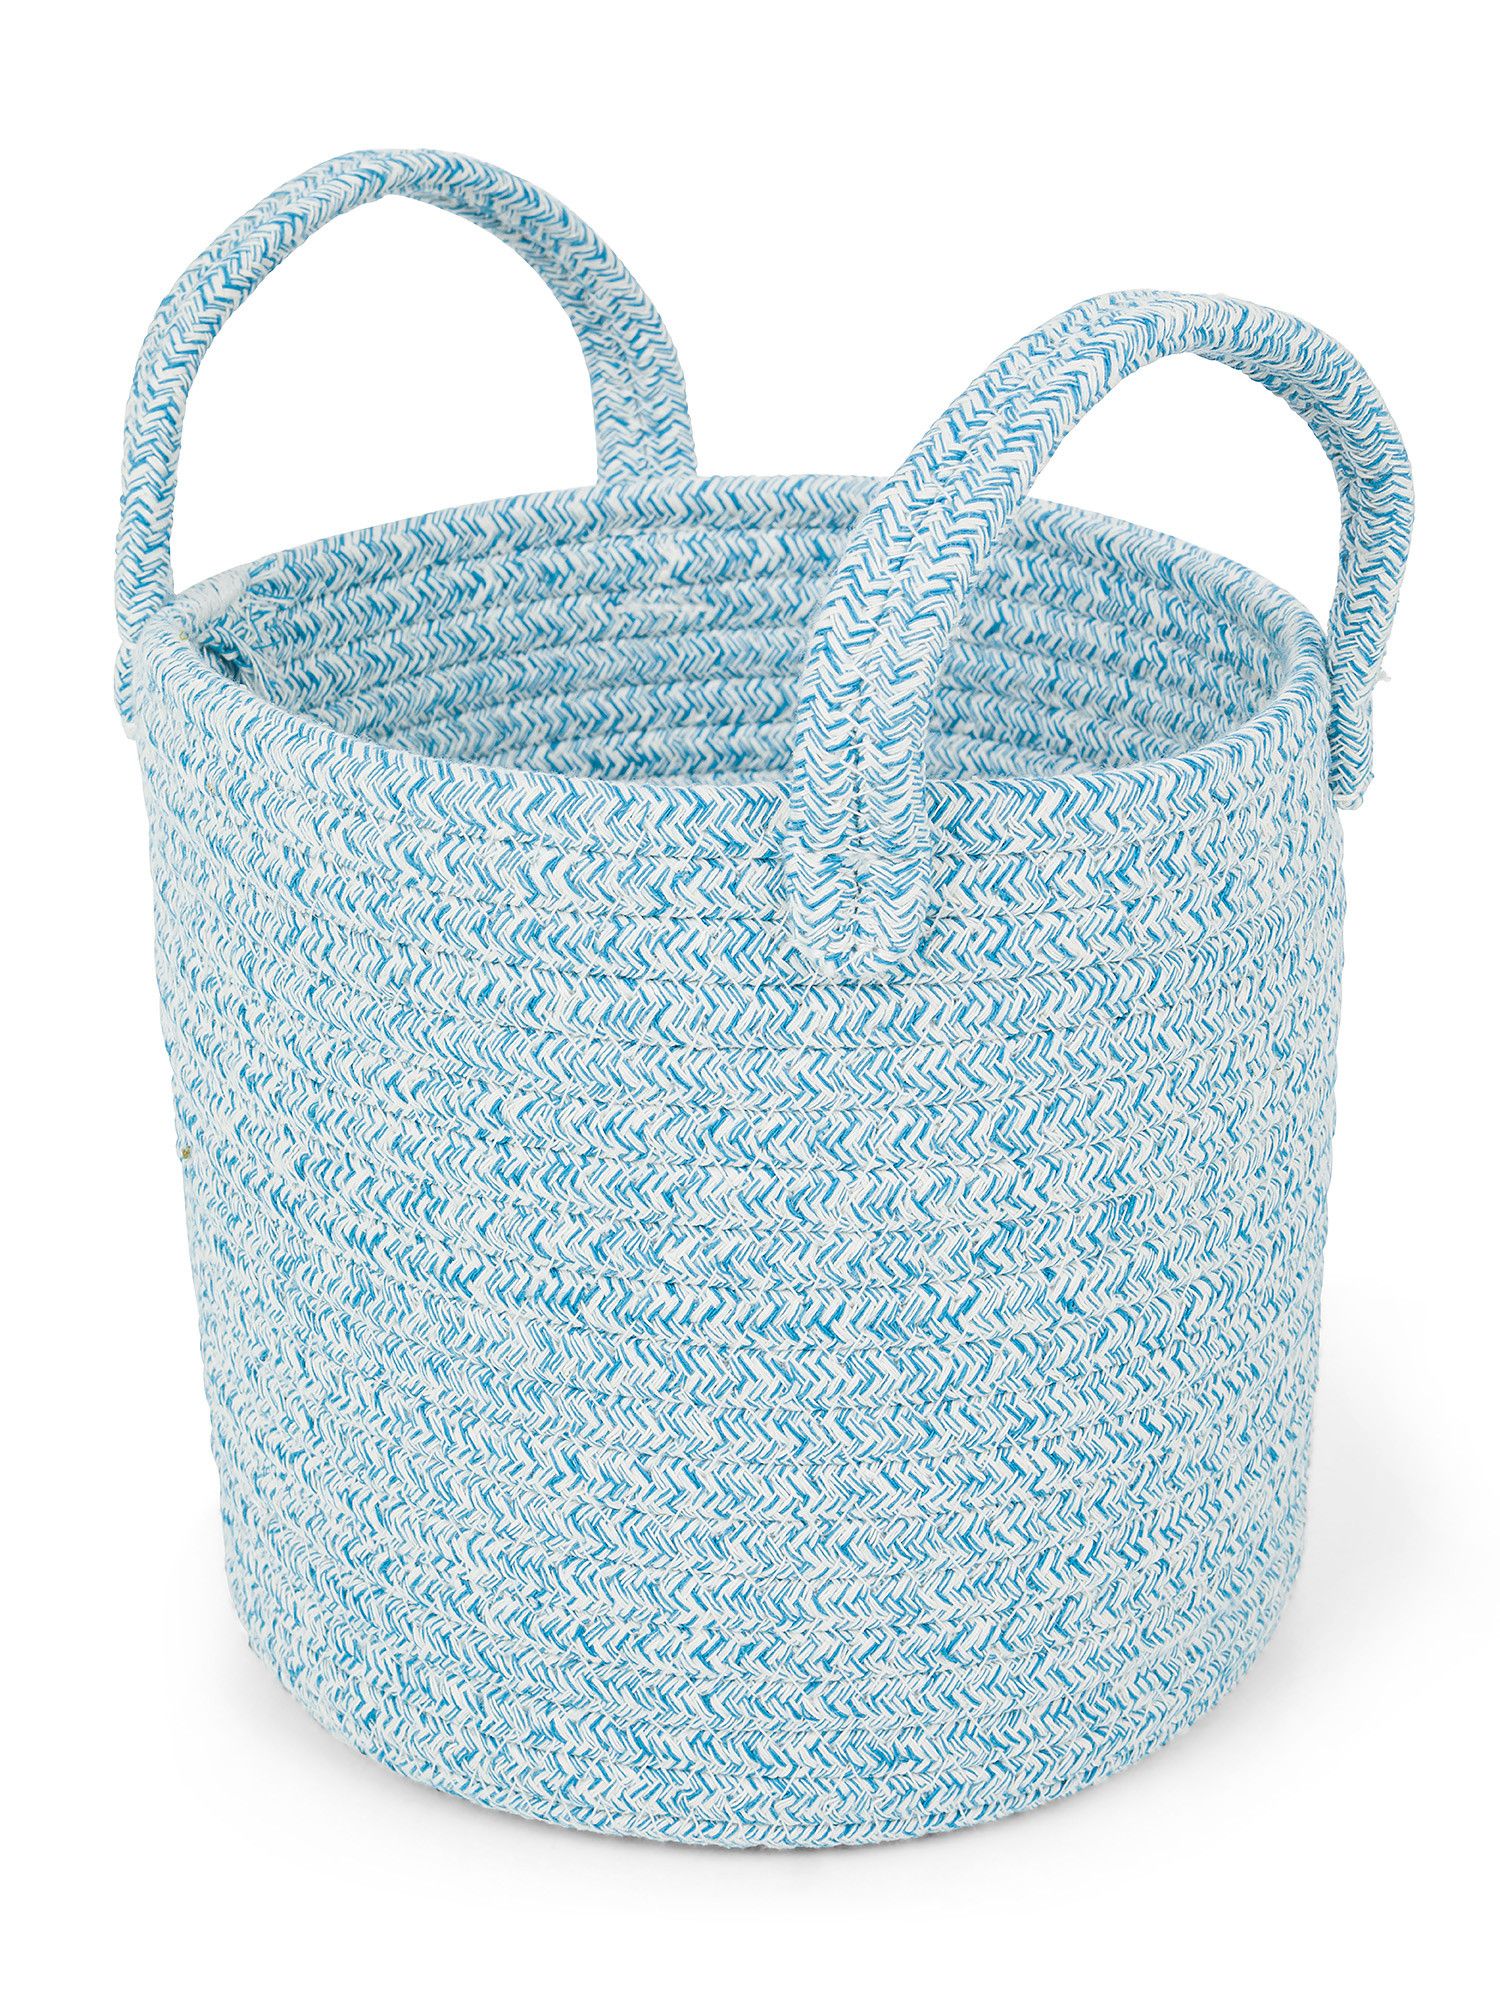 Rope basket with handles, Light Blue, large image number 1